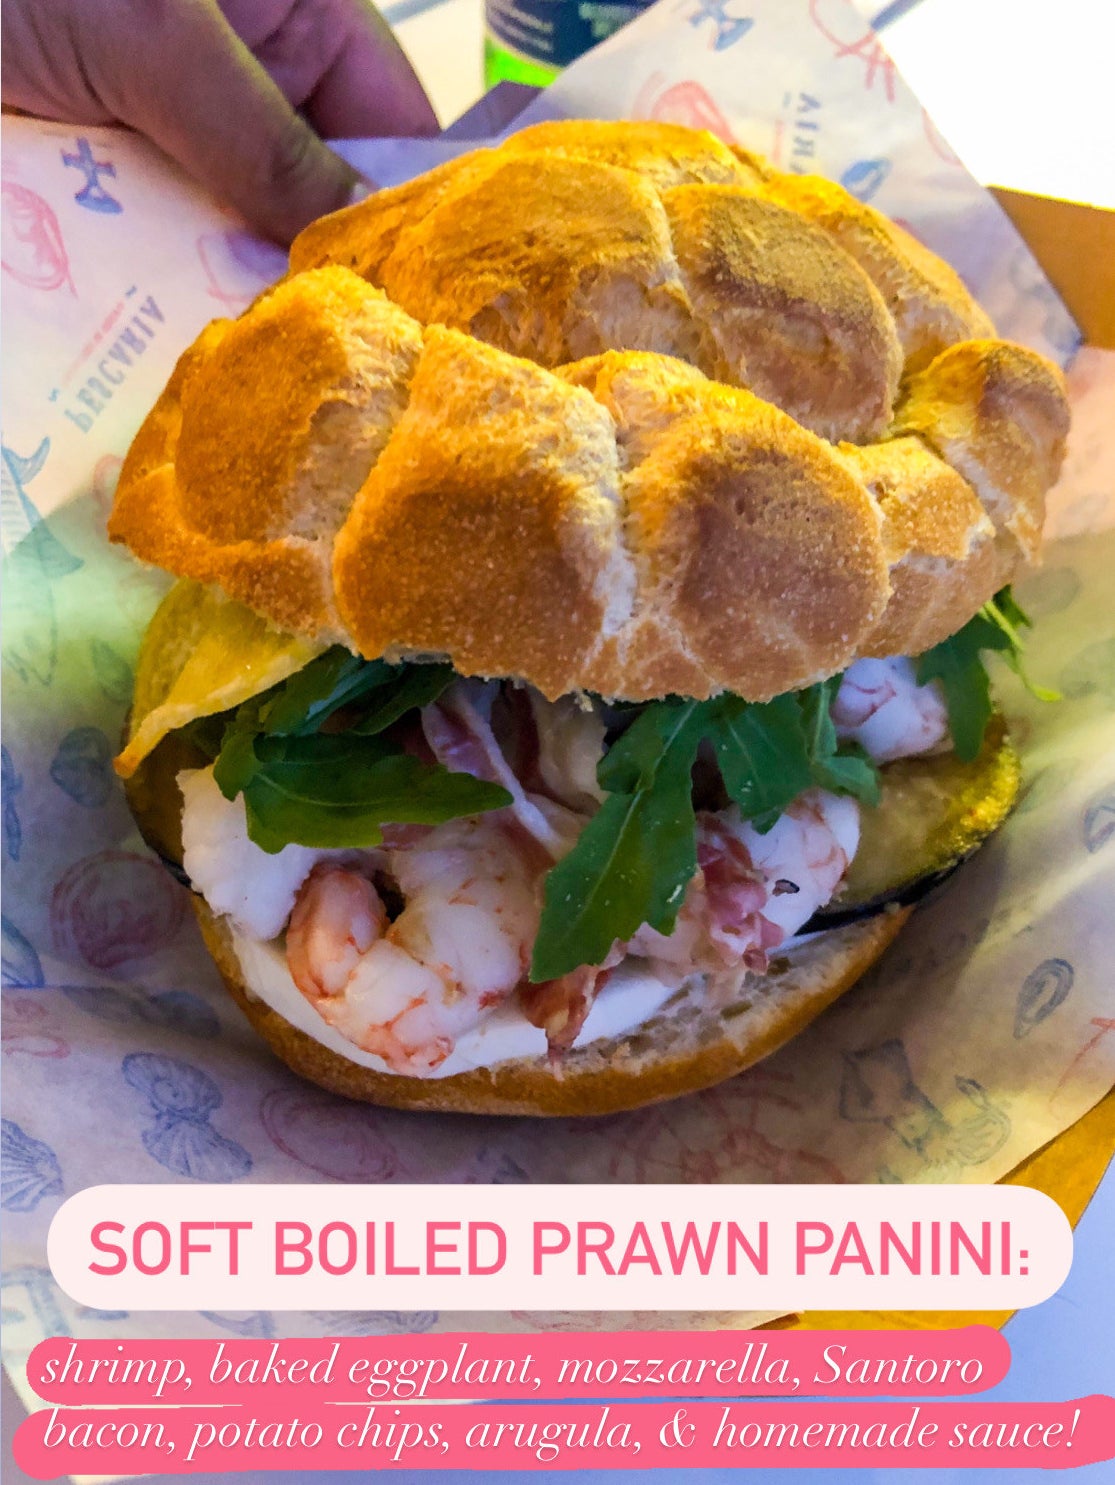 Seafood panini